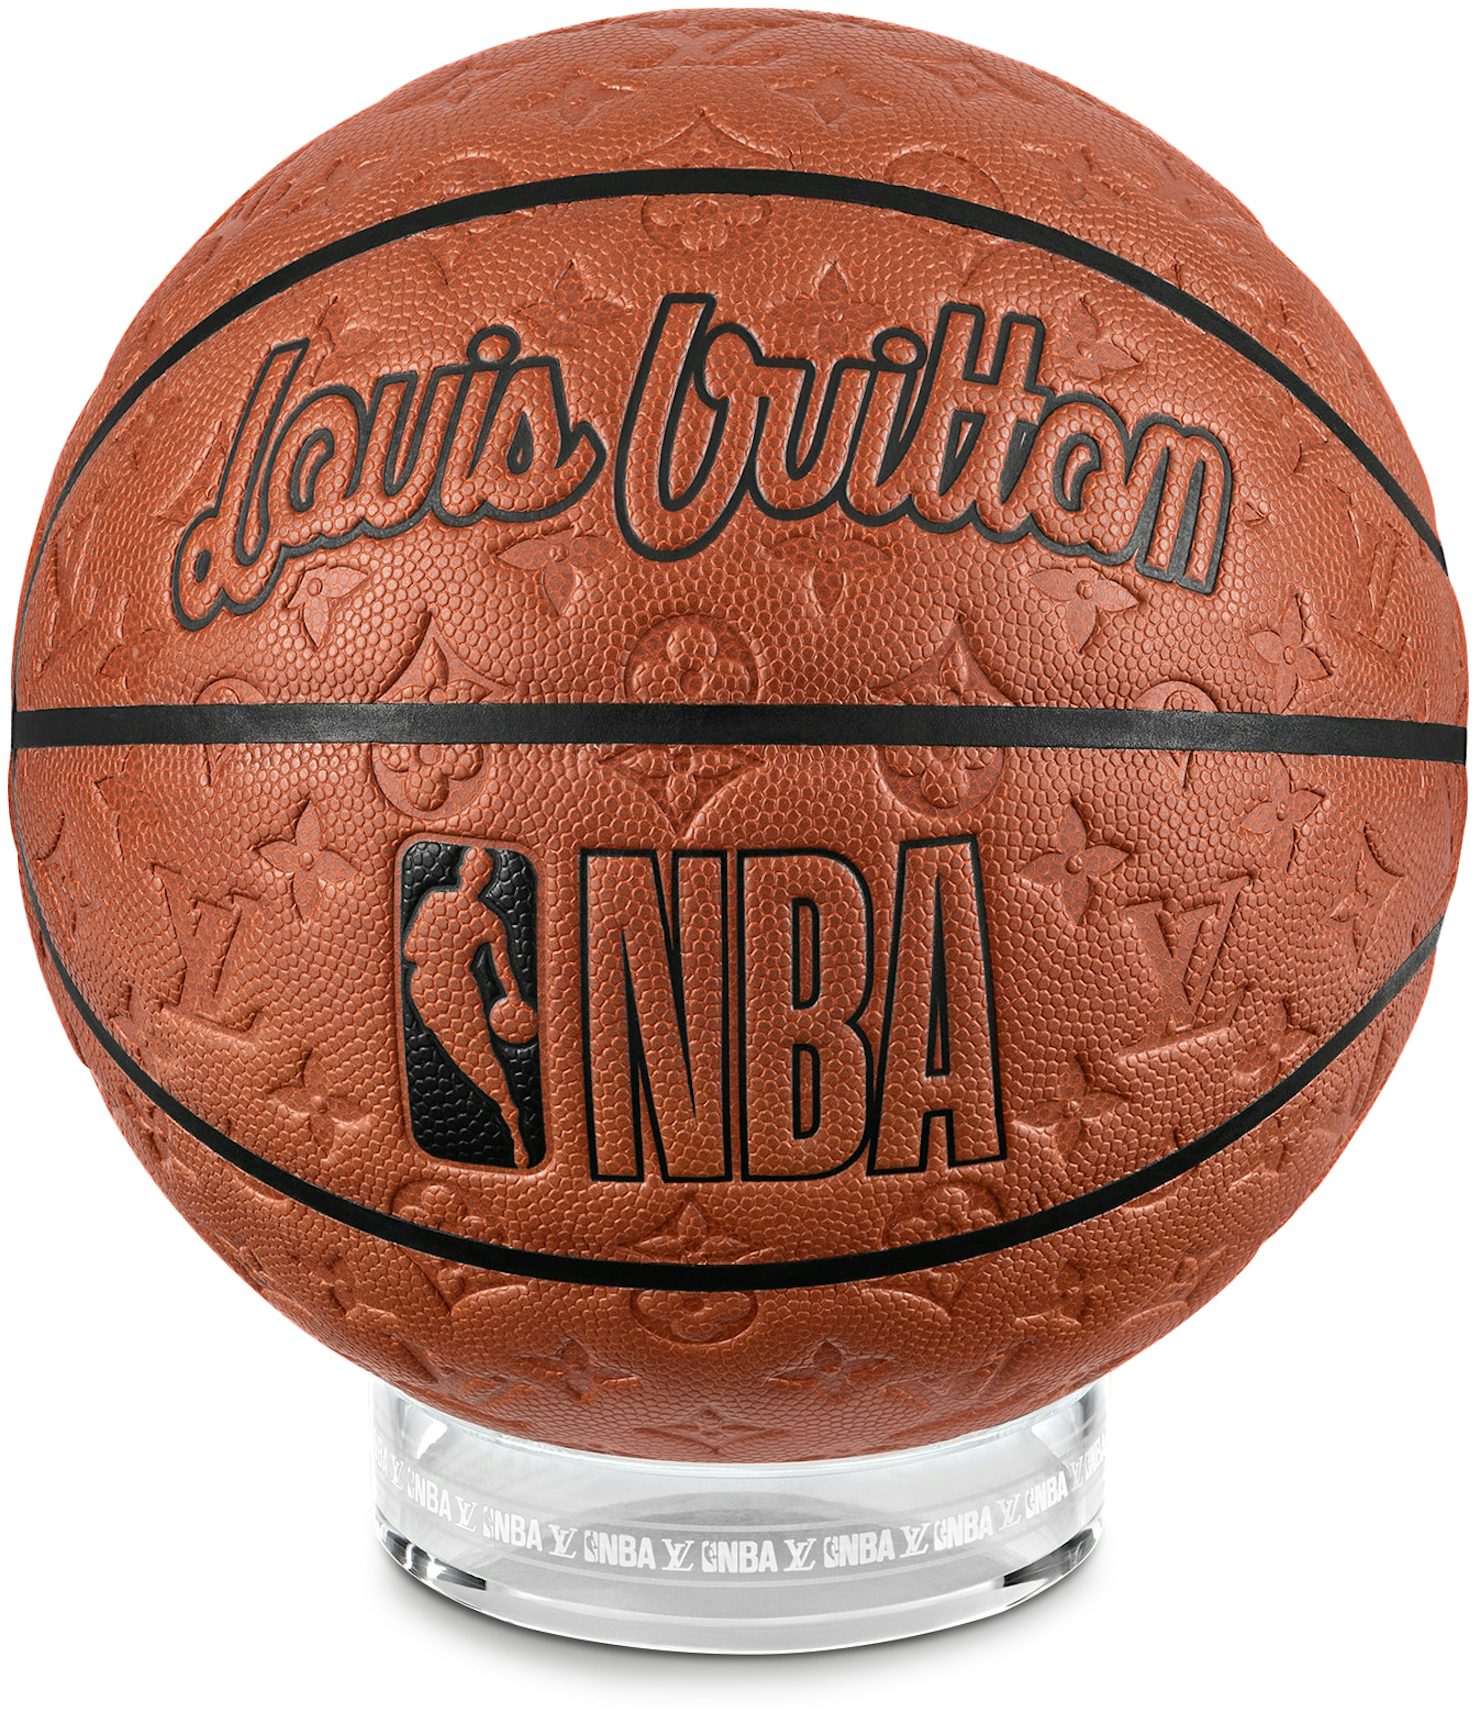 Louis Vuitton X NBA Basketball Jacket